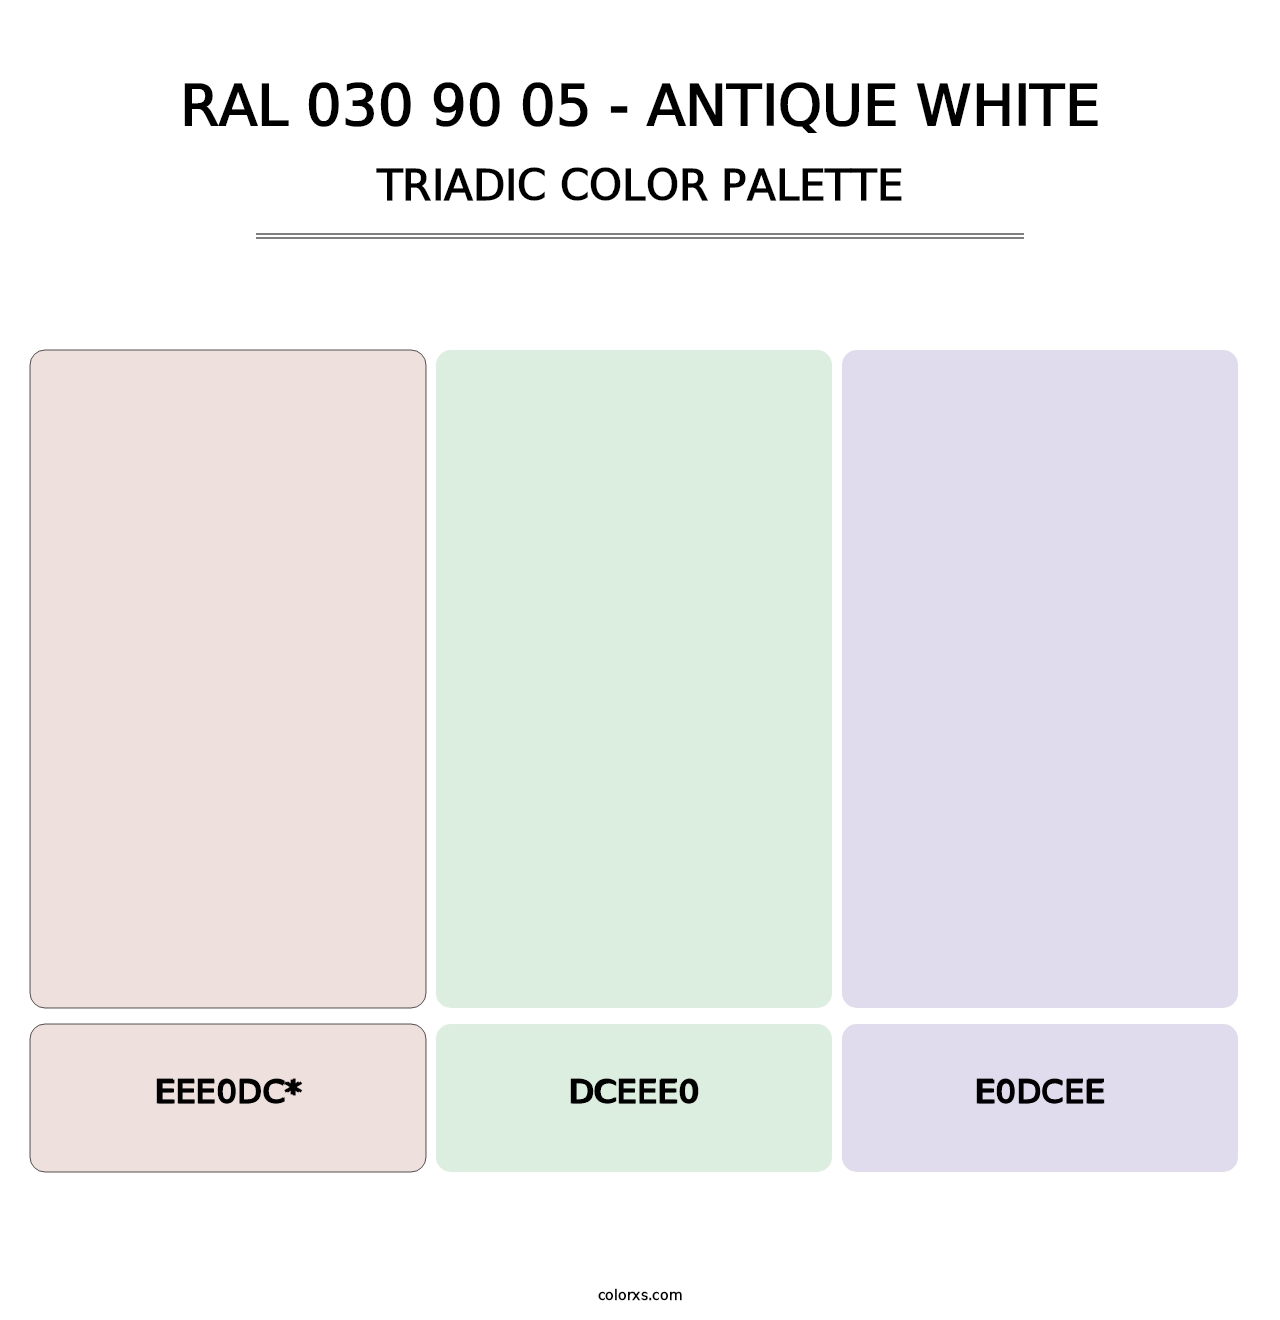 RAL 030 90 05 - Antique White - Triadic Color Palette